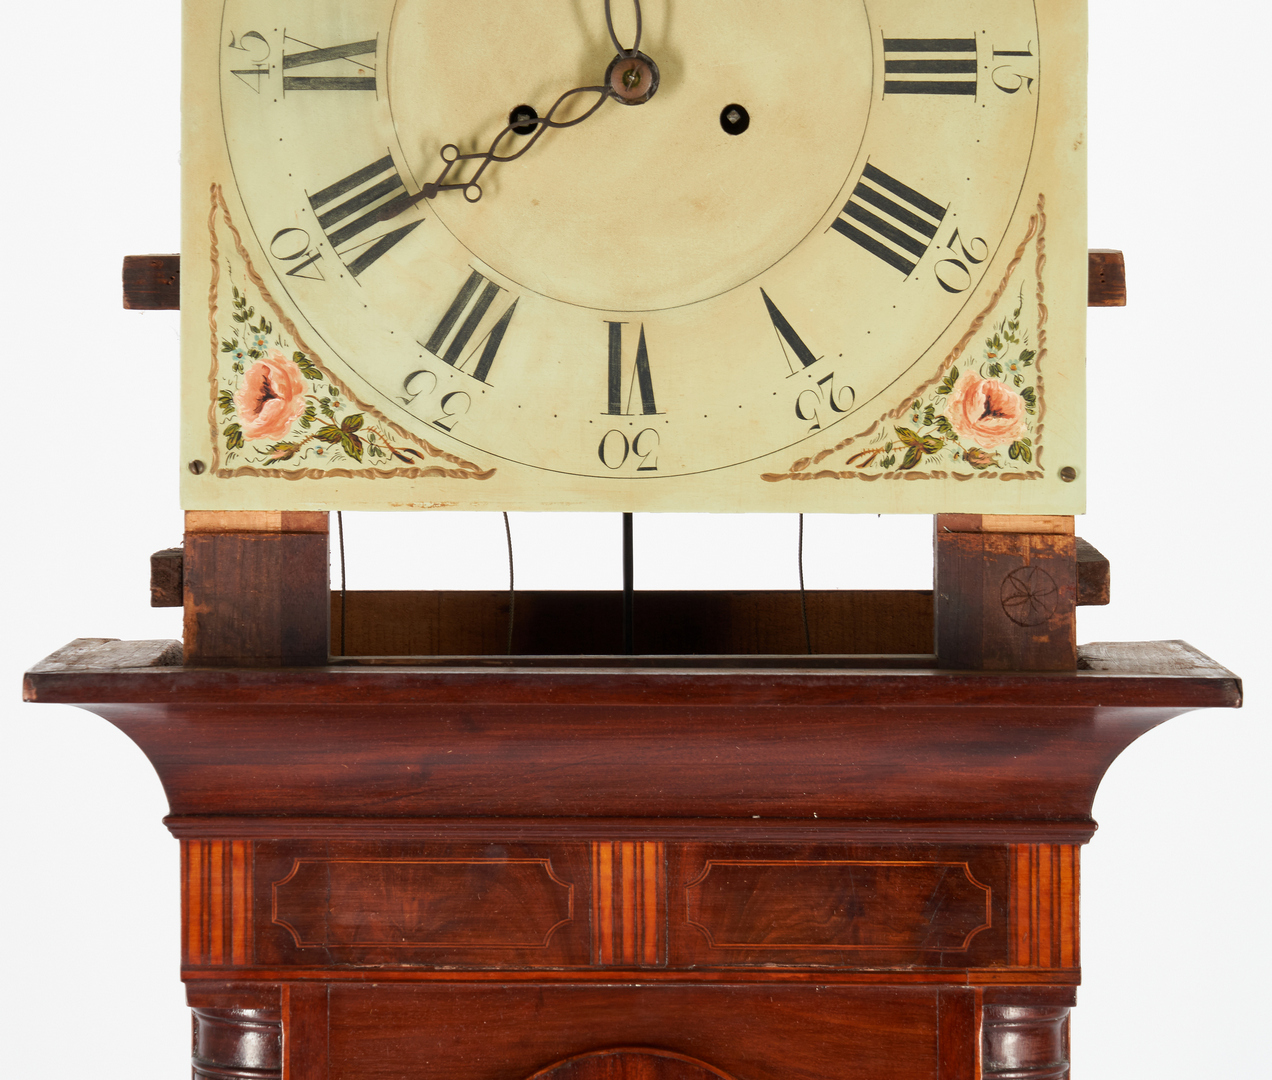 Lot 233: American Federal Inlaid Tall Case Clock, Poss. NJ